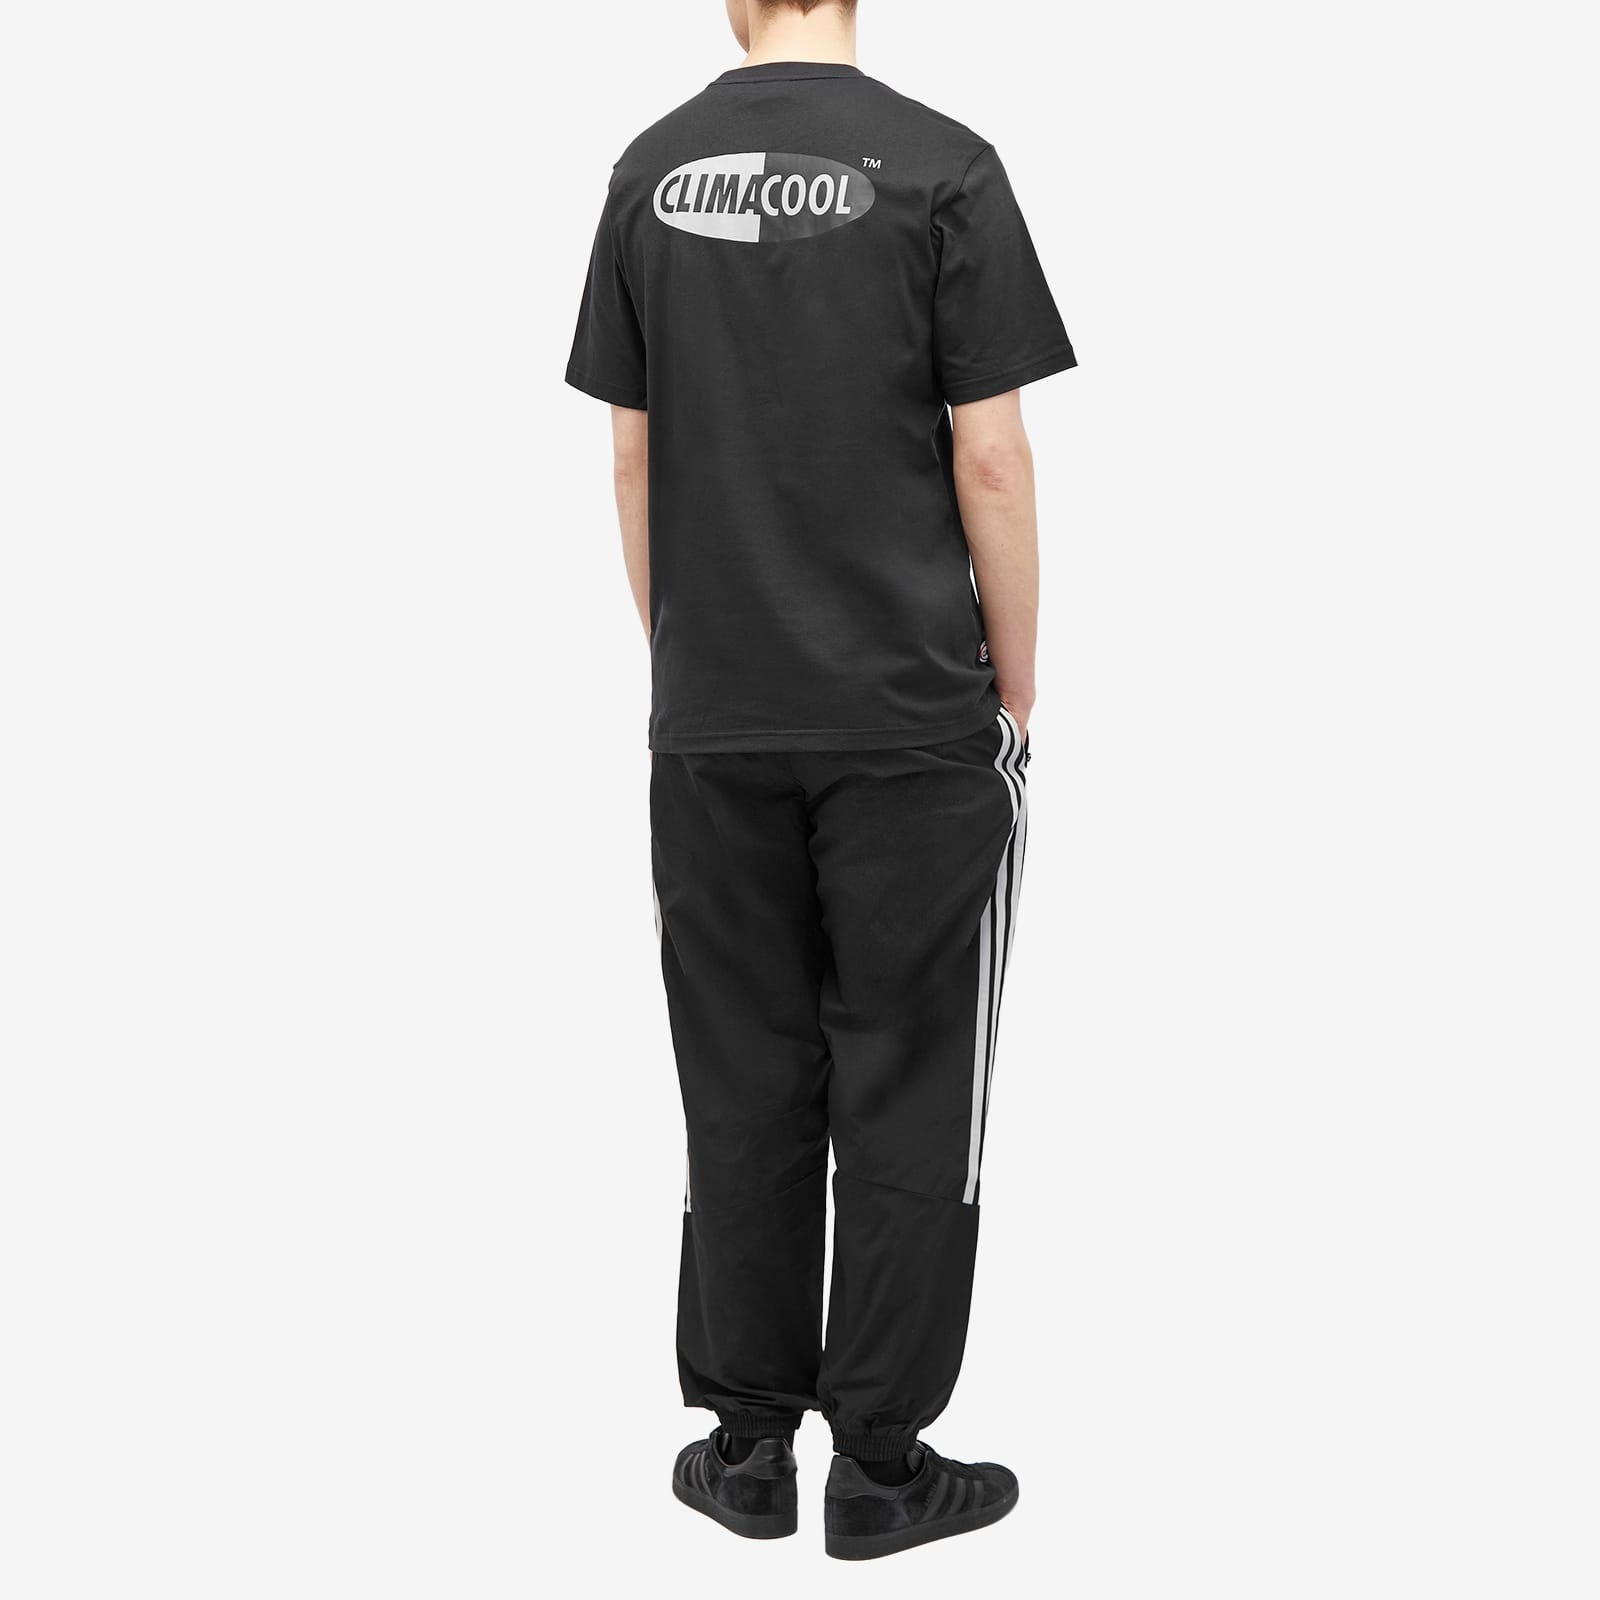 Adidas Climacool T-Shirt - 5